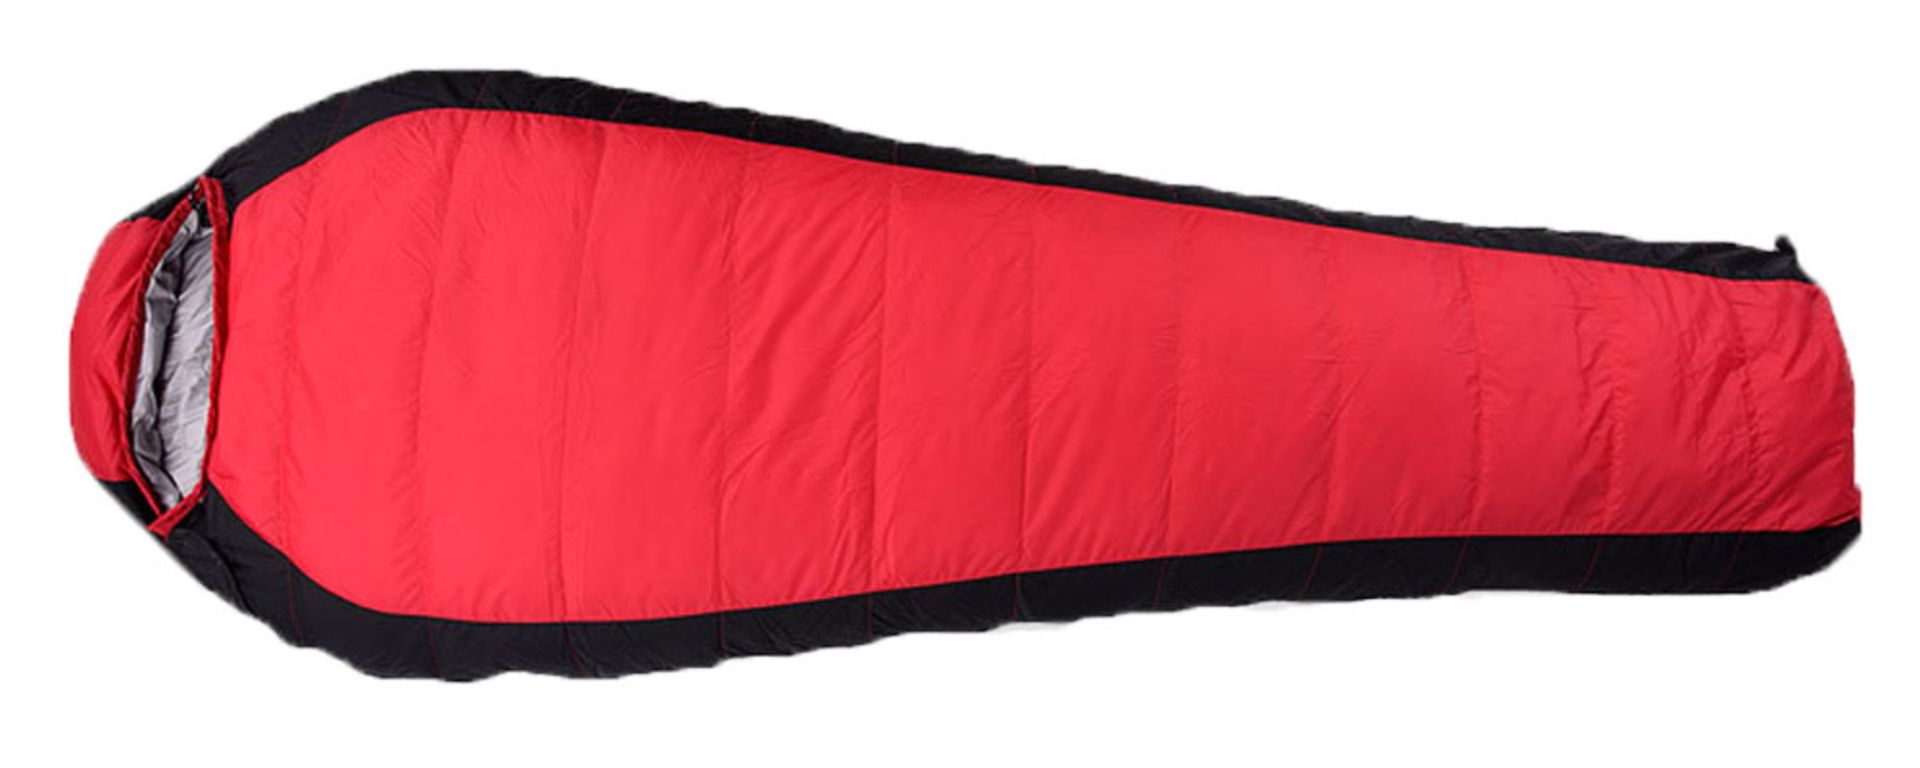 UNITS - RBSM COUPLE MUMMY STYLE SLEEPING BAG (NEW) (MSRP $100) - Image 4 of 5